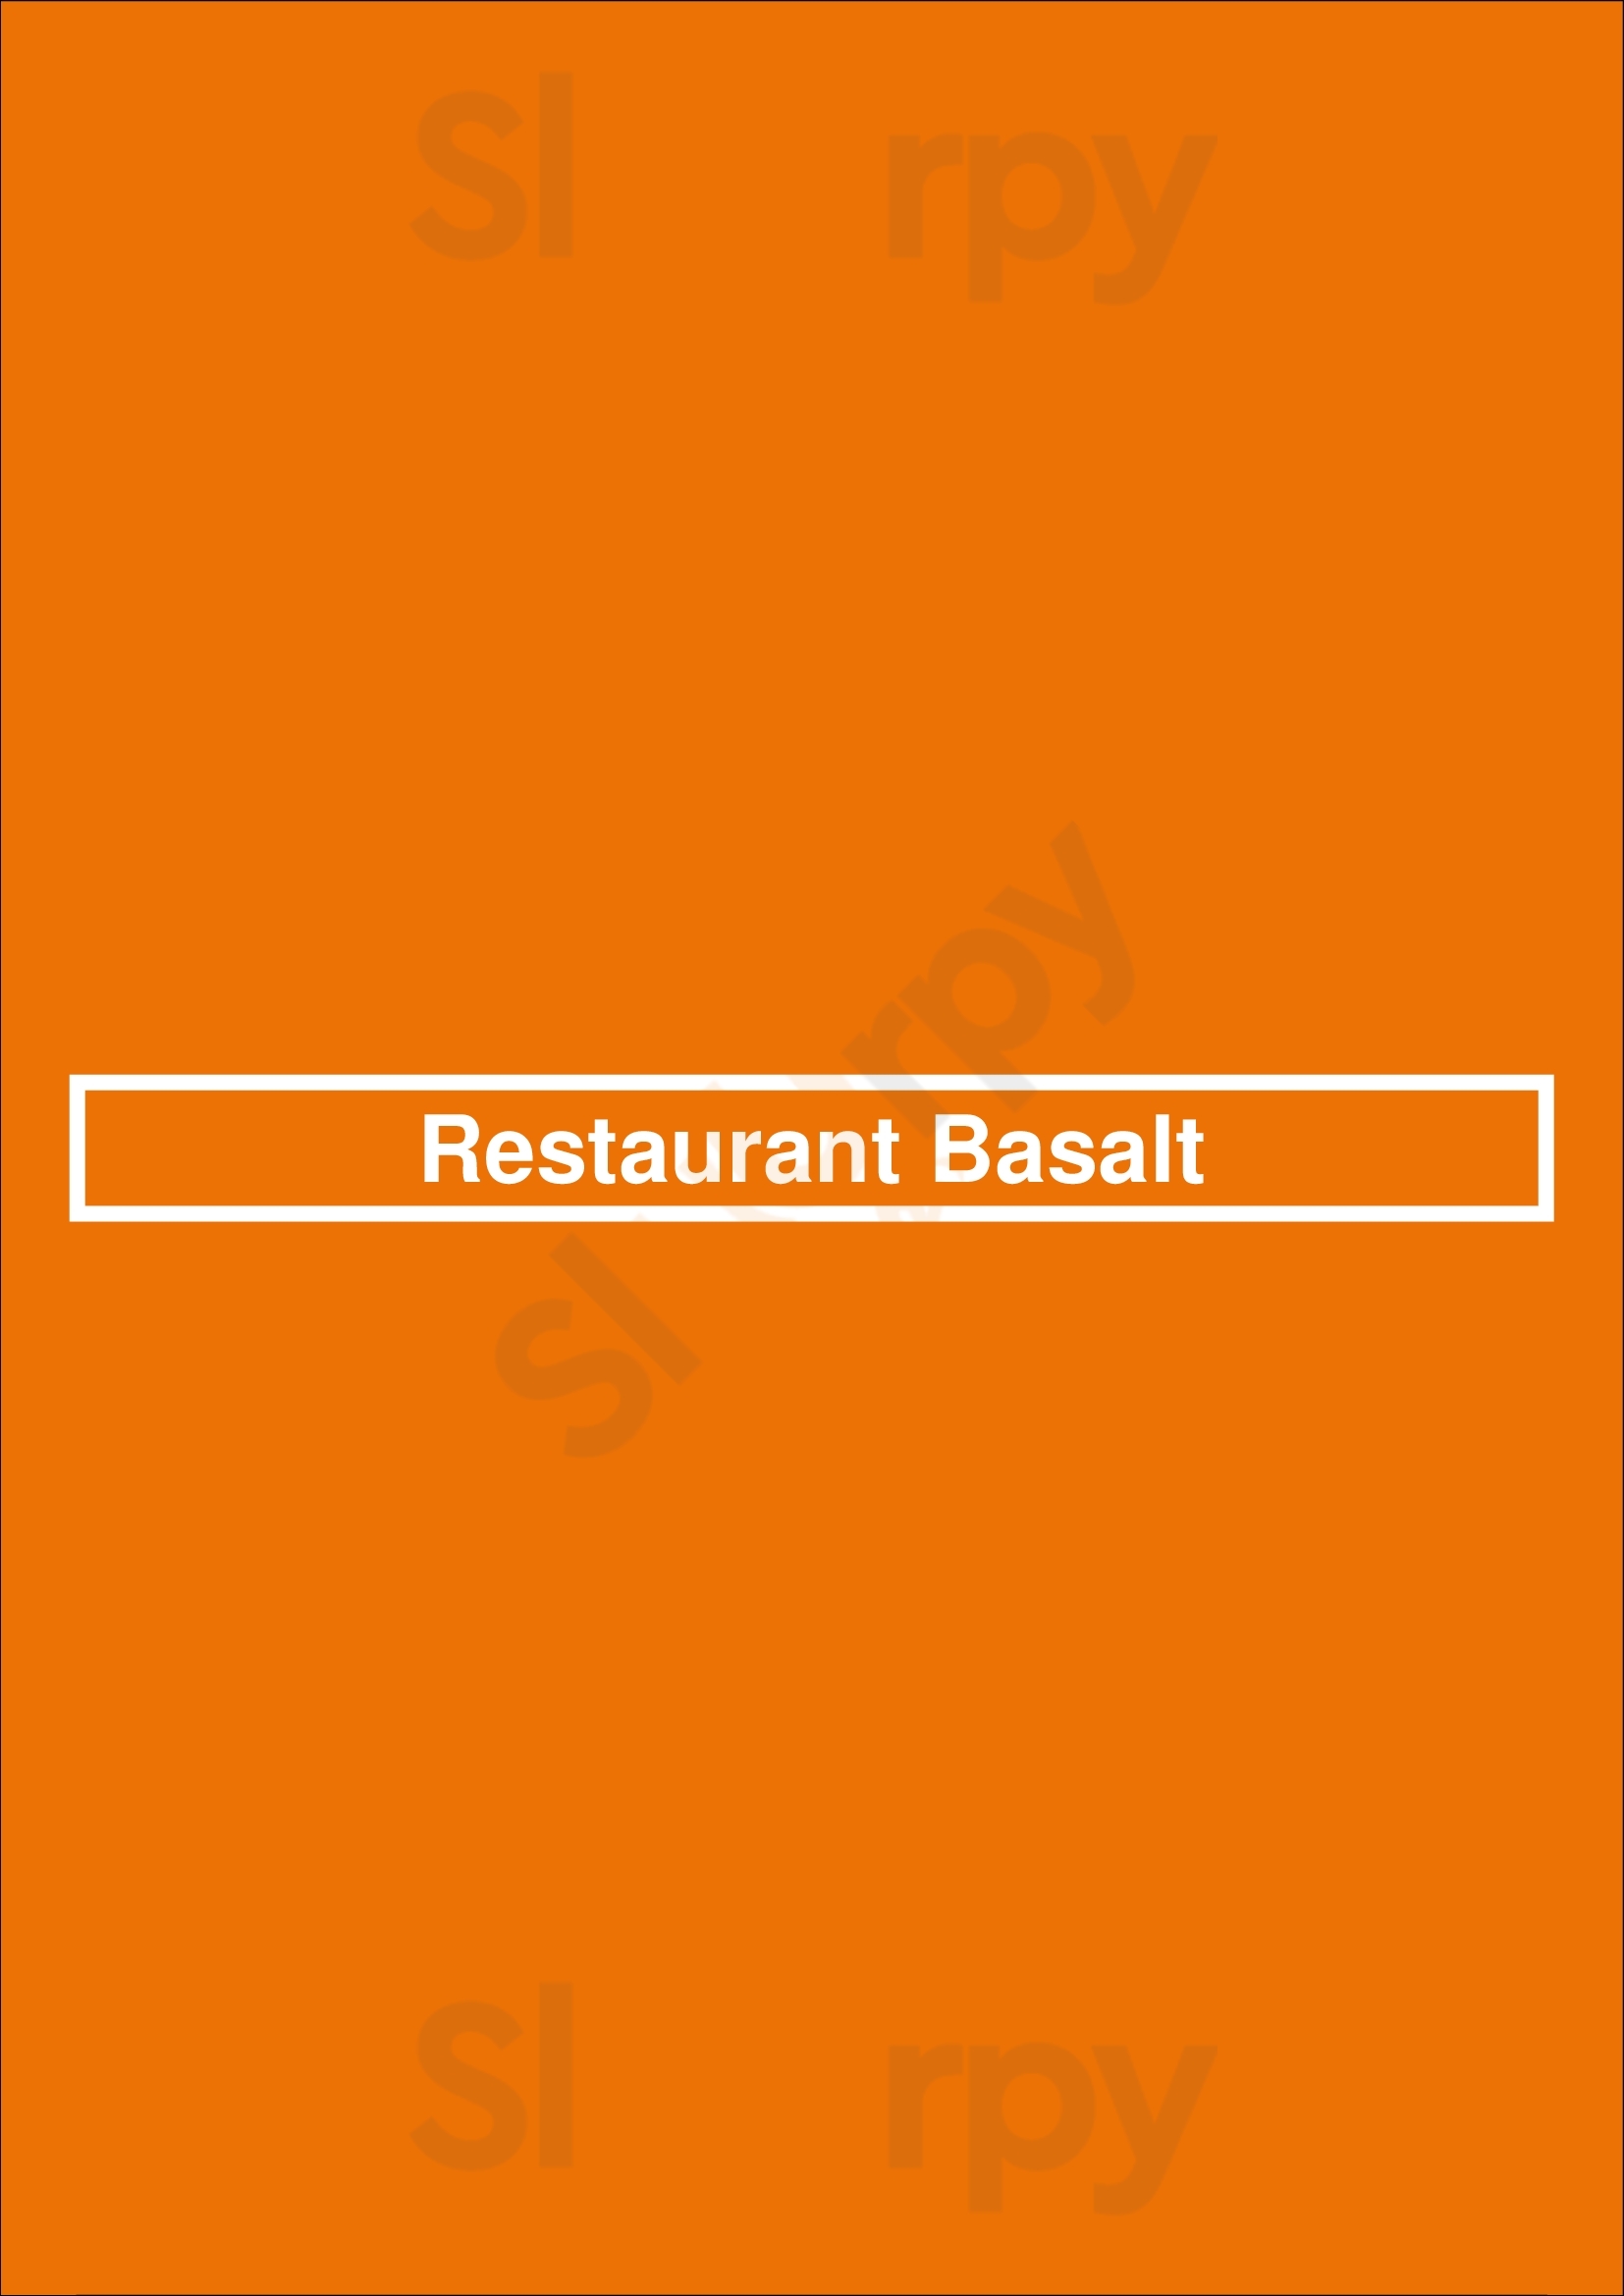 Restaurant Basalt Den Oever Menu - 1